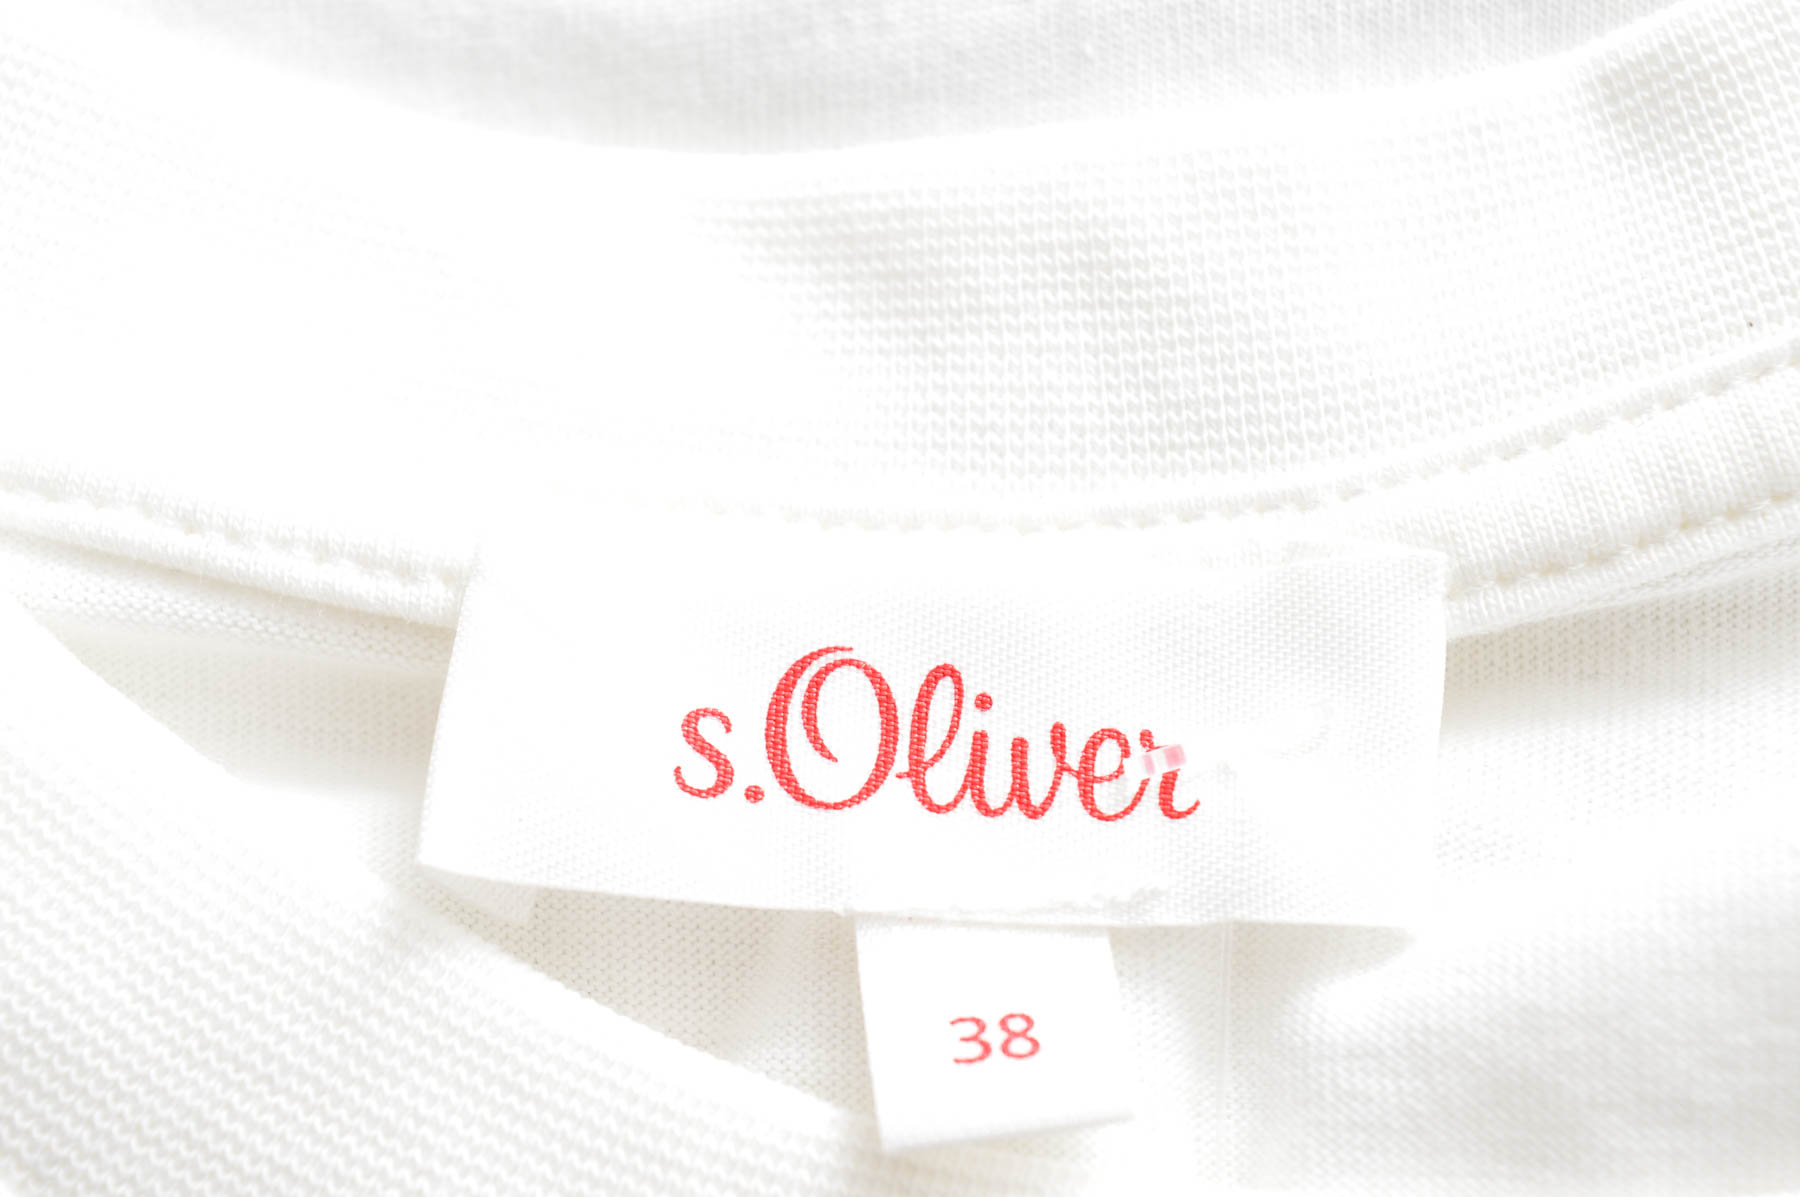 Women's t-shirt - S.Oliver - 2